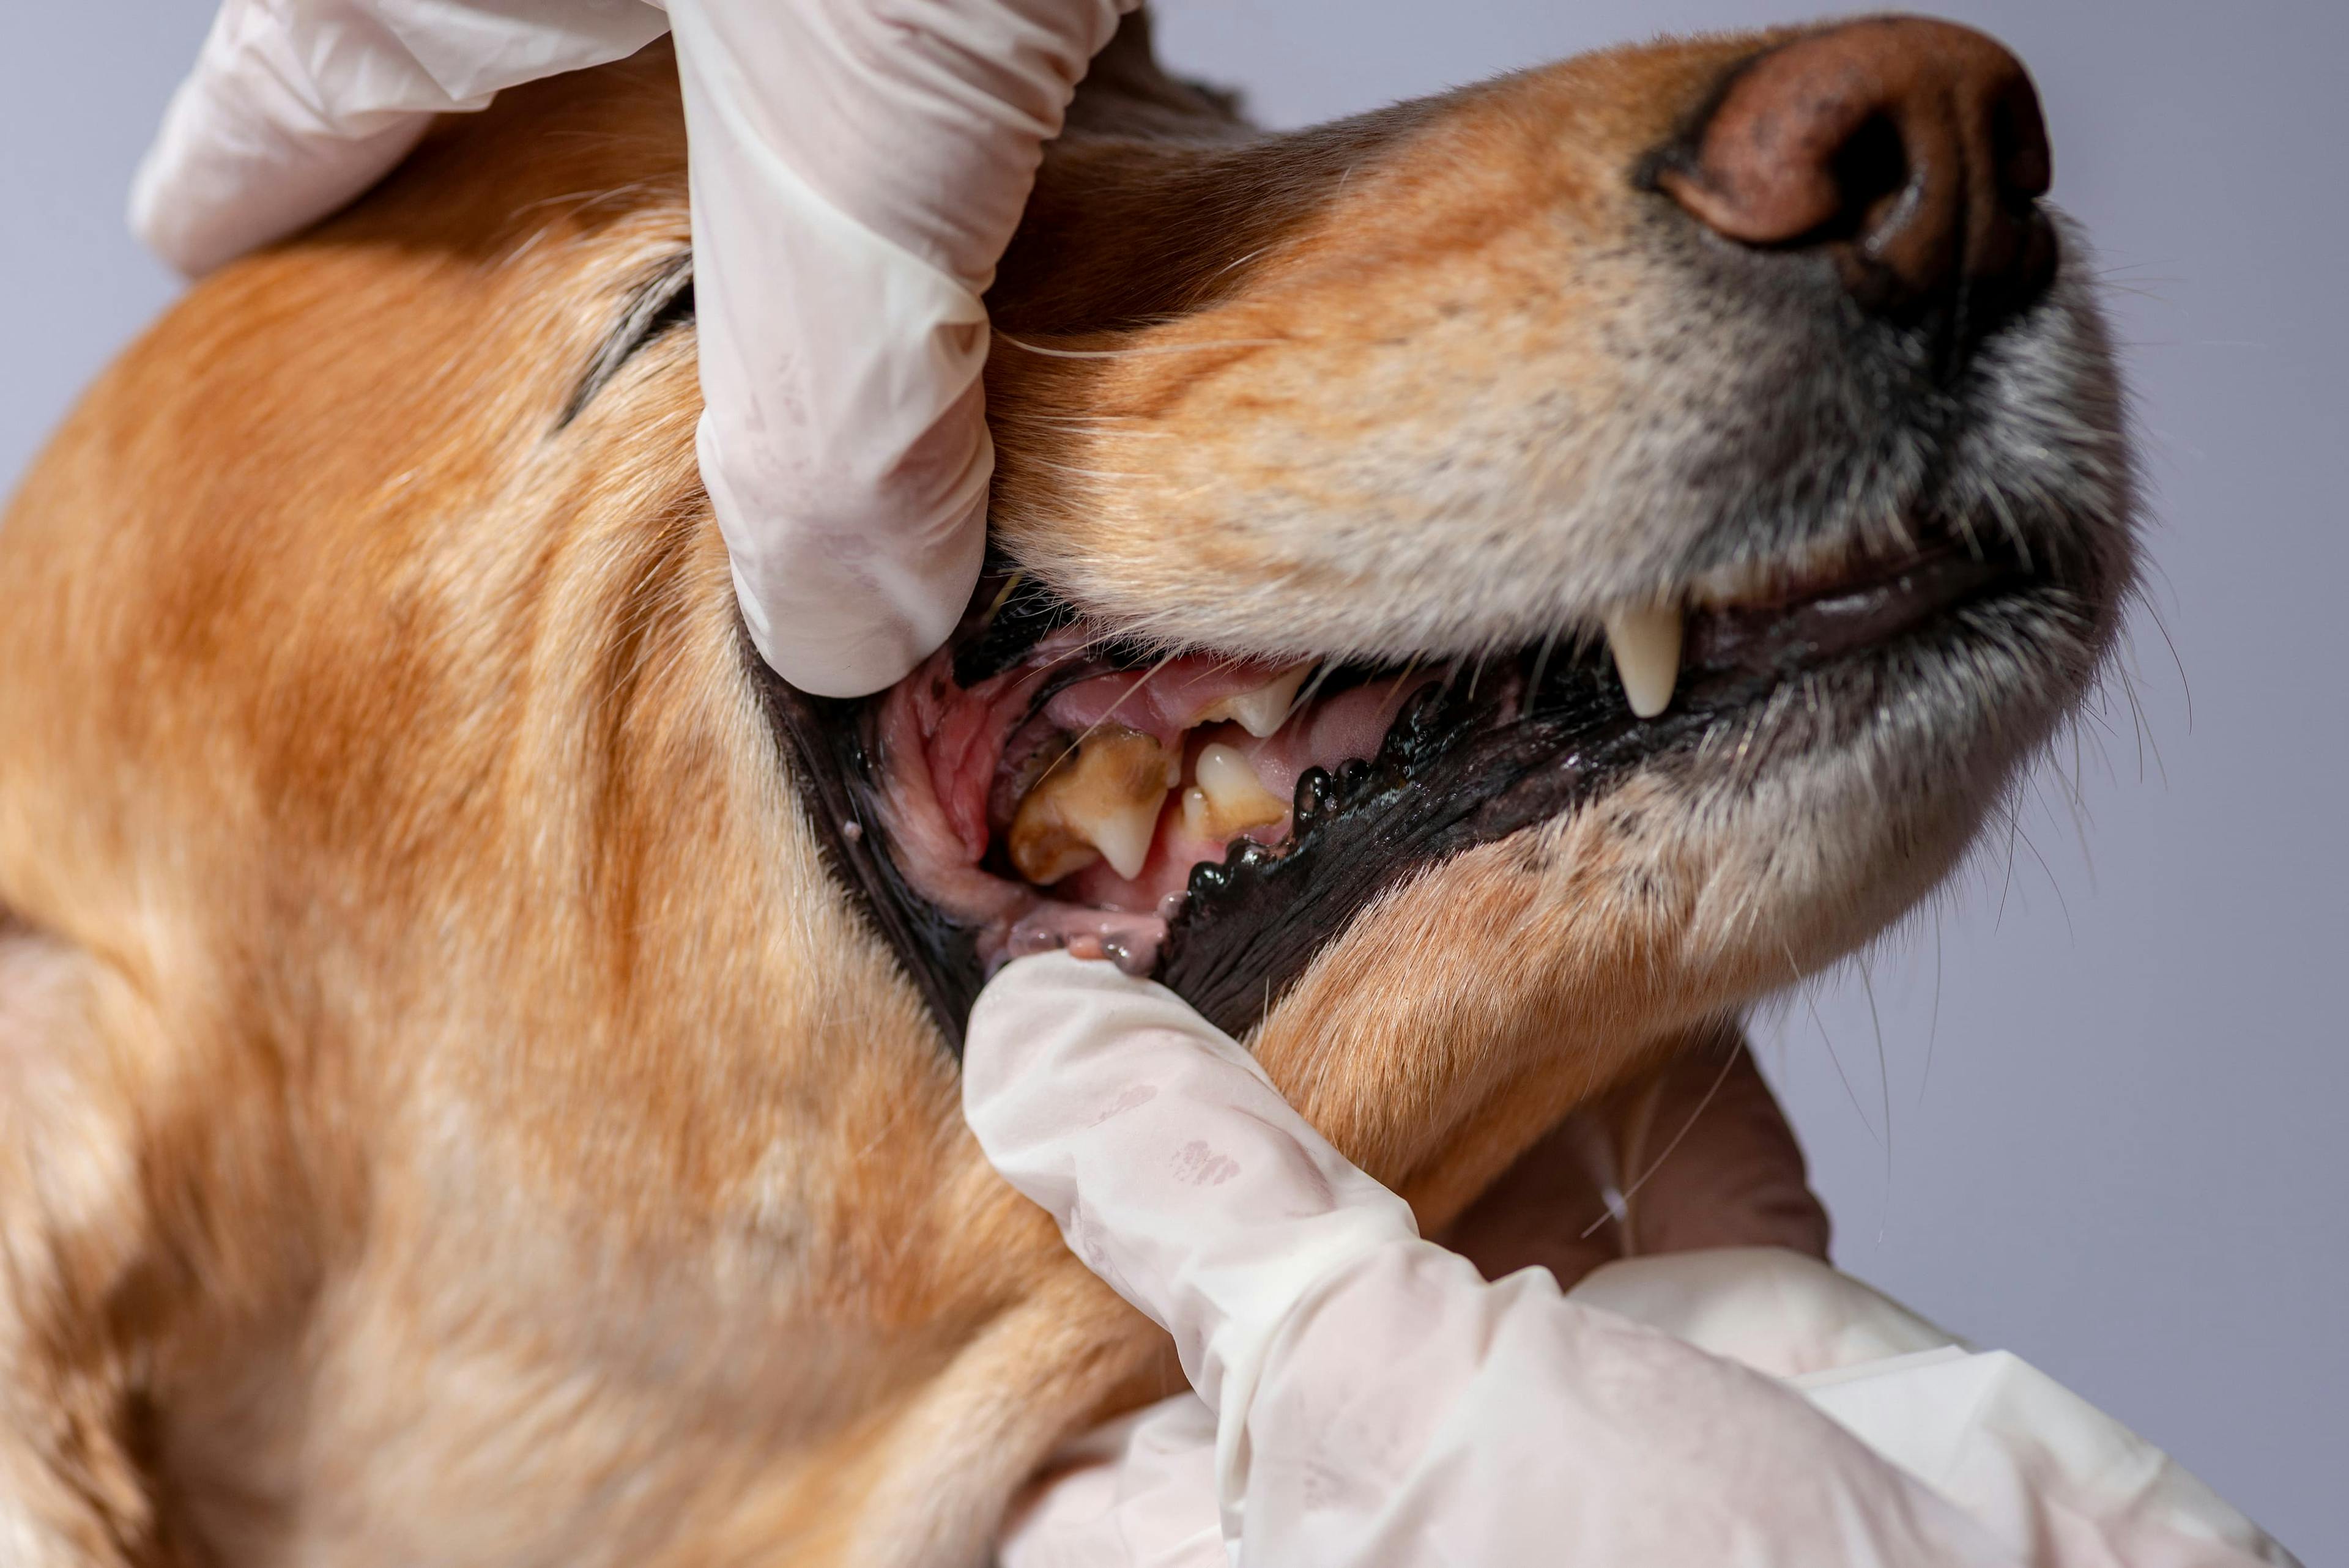 Dog dental examination / Игор Чусь / stock.adobe.com